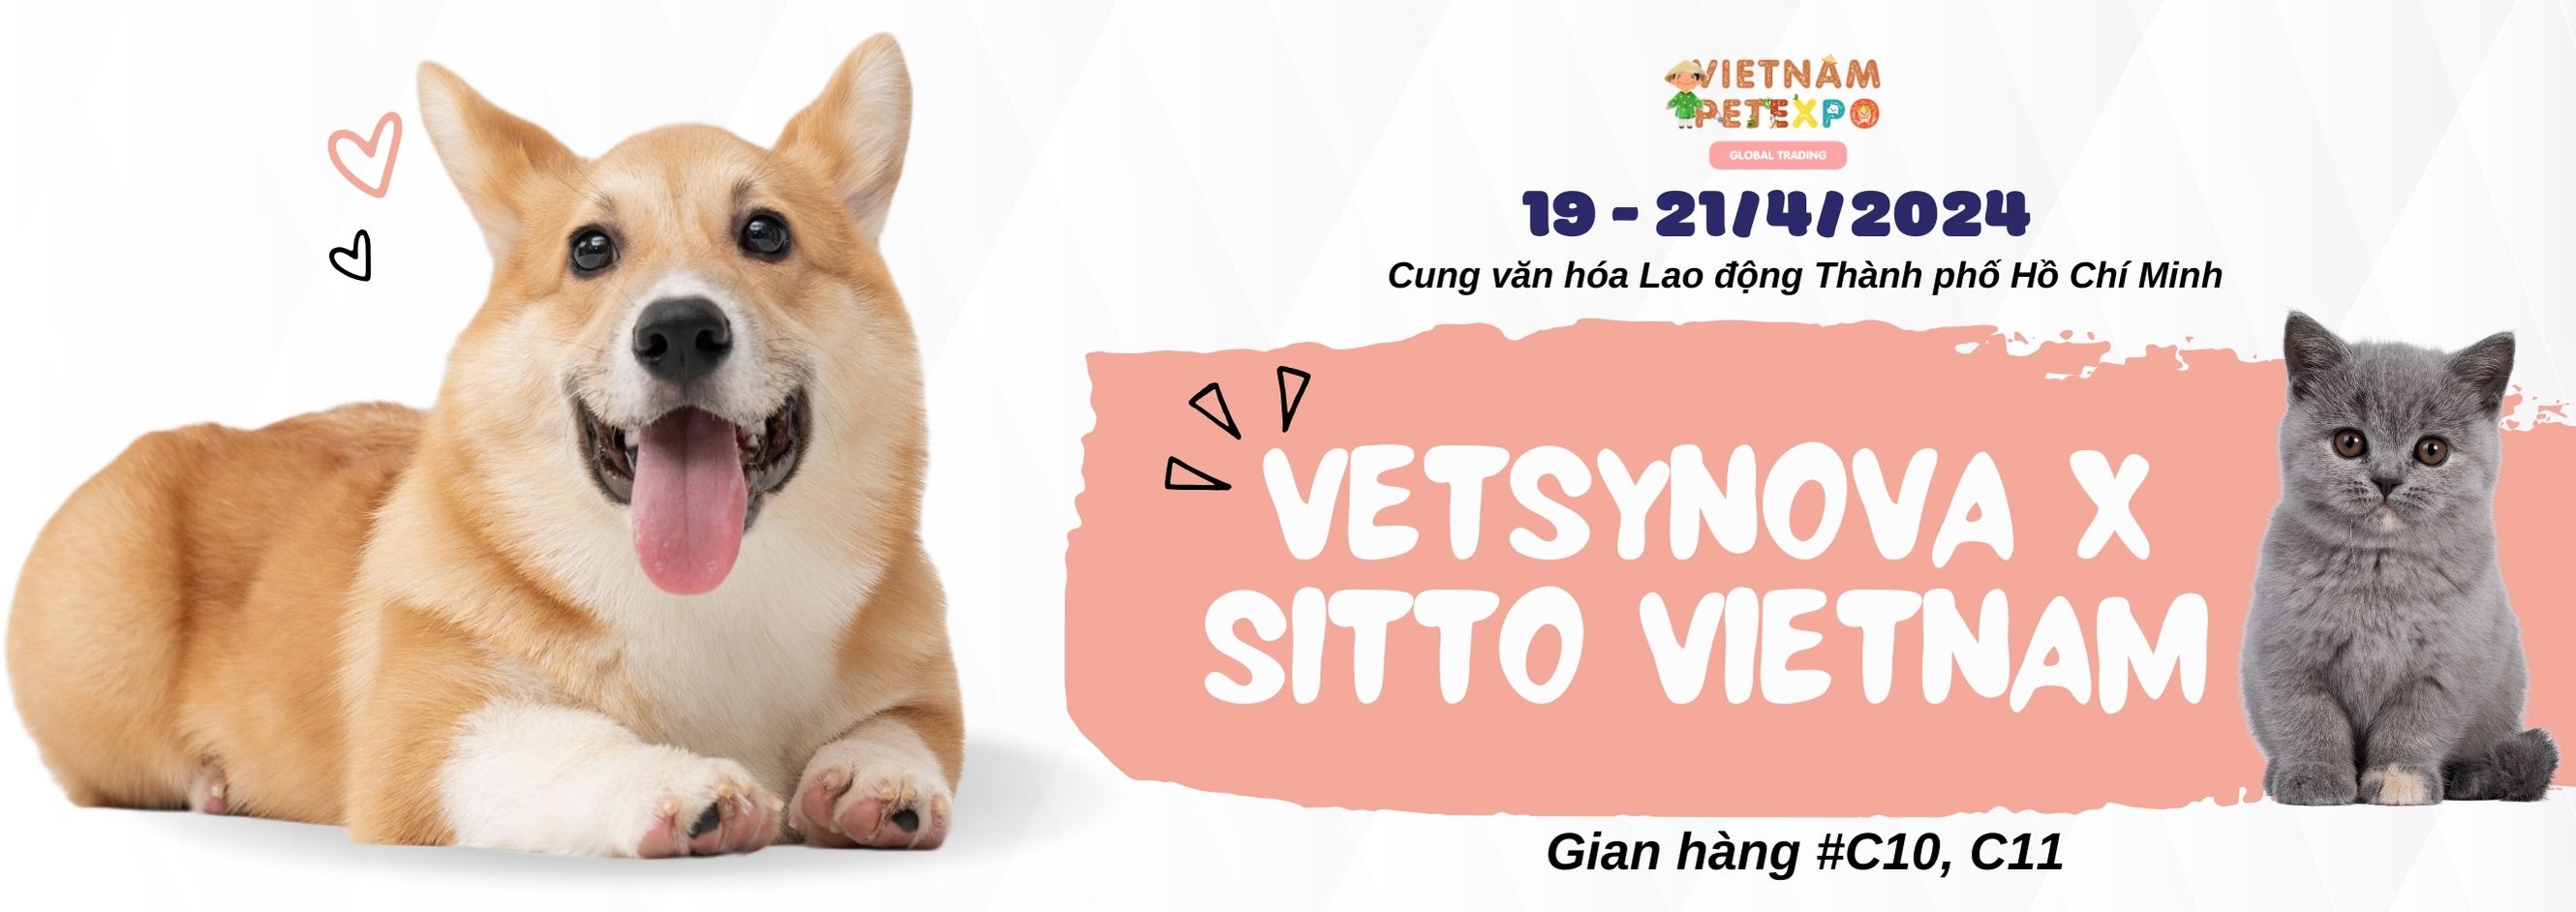 VetsynovaxSittovietnam Pet-expo